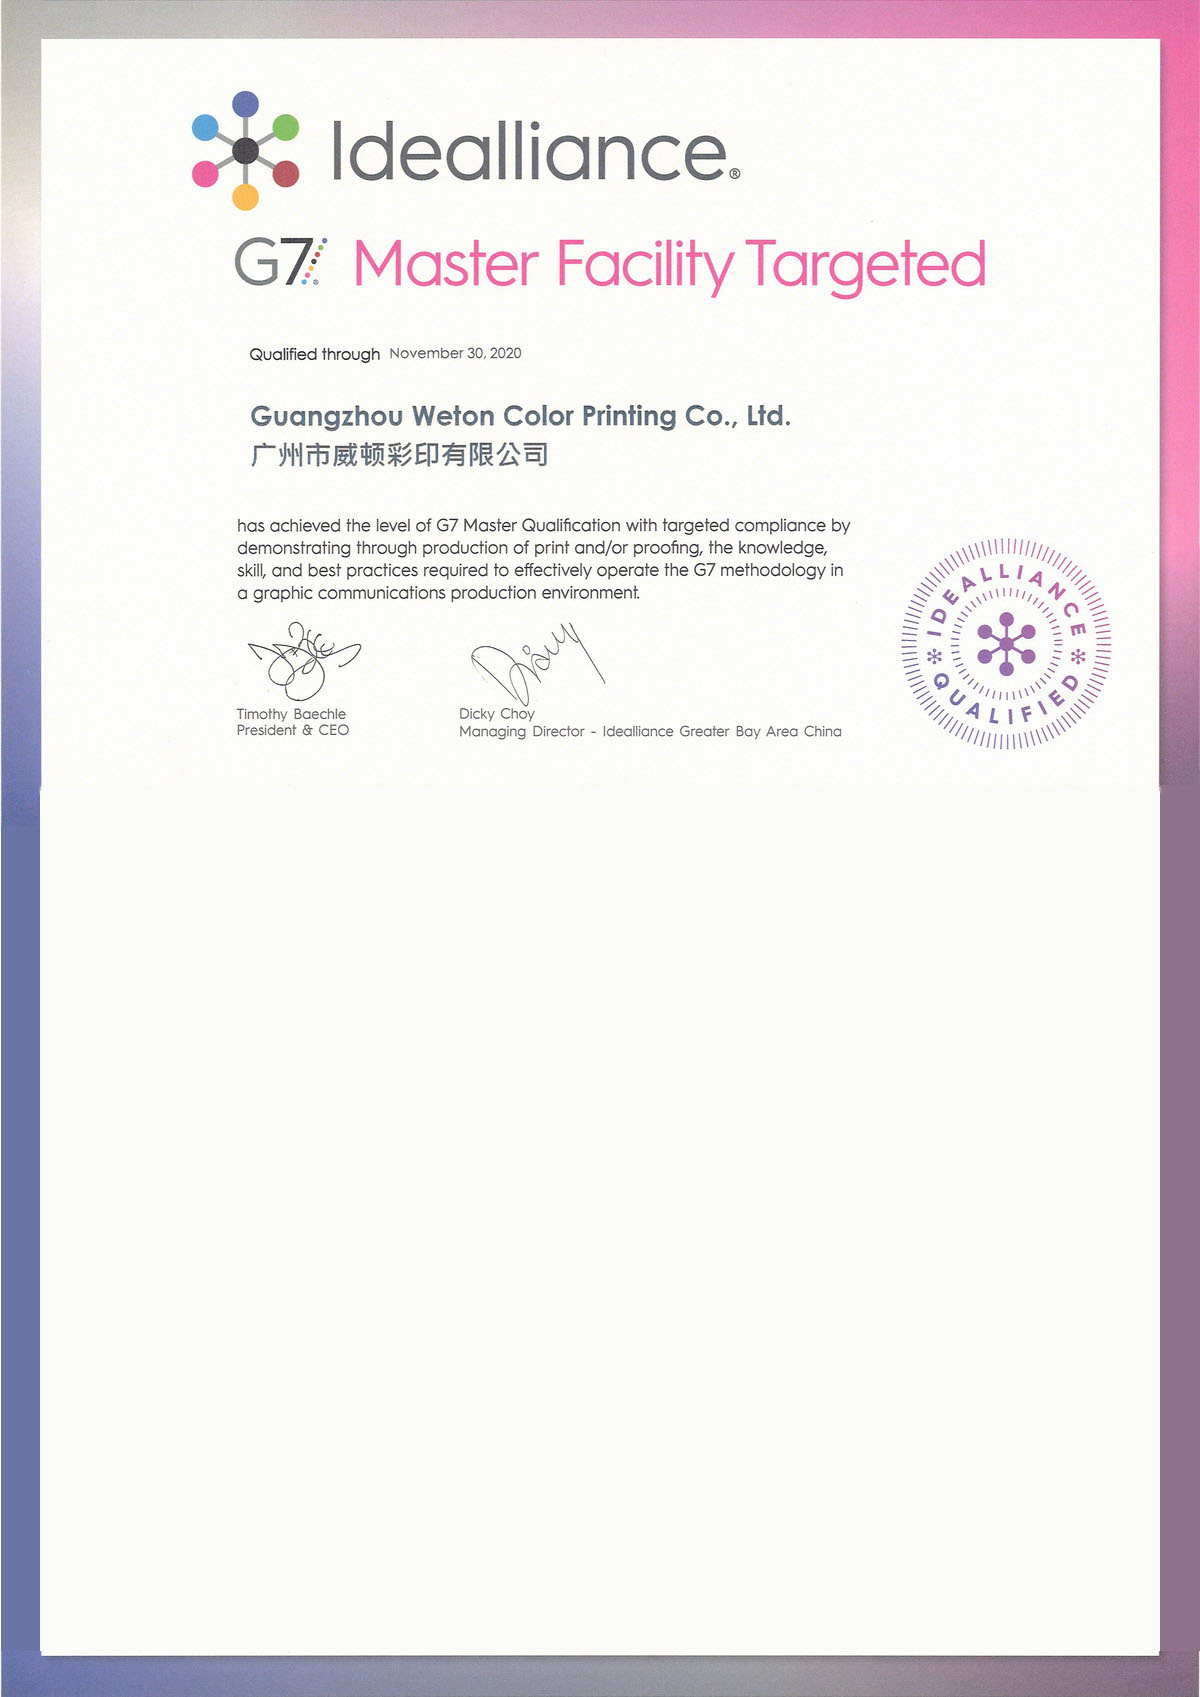 G7 Master Facility Targeted.jpg